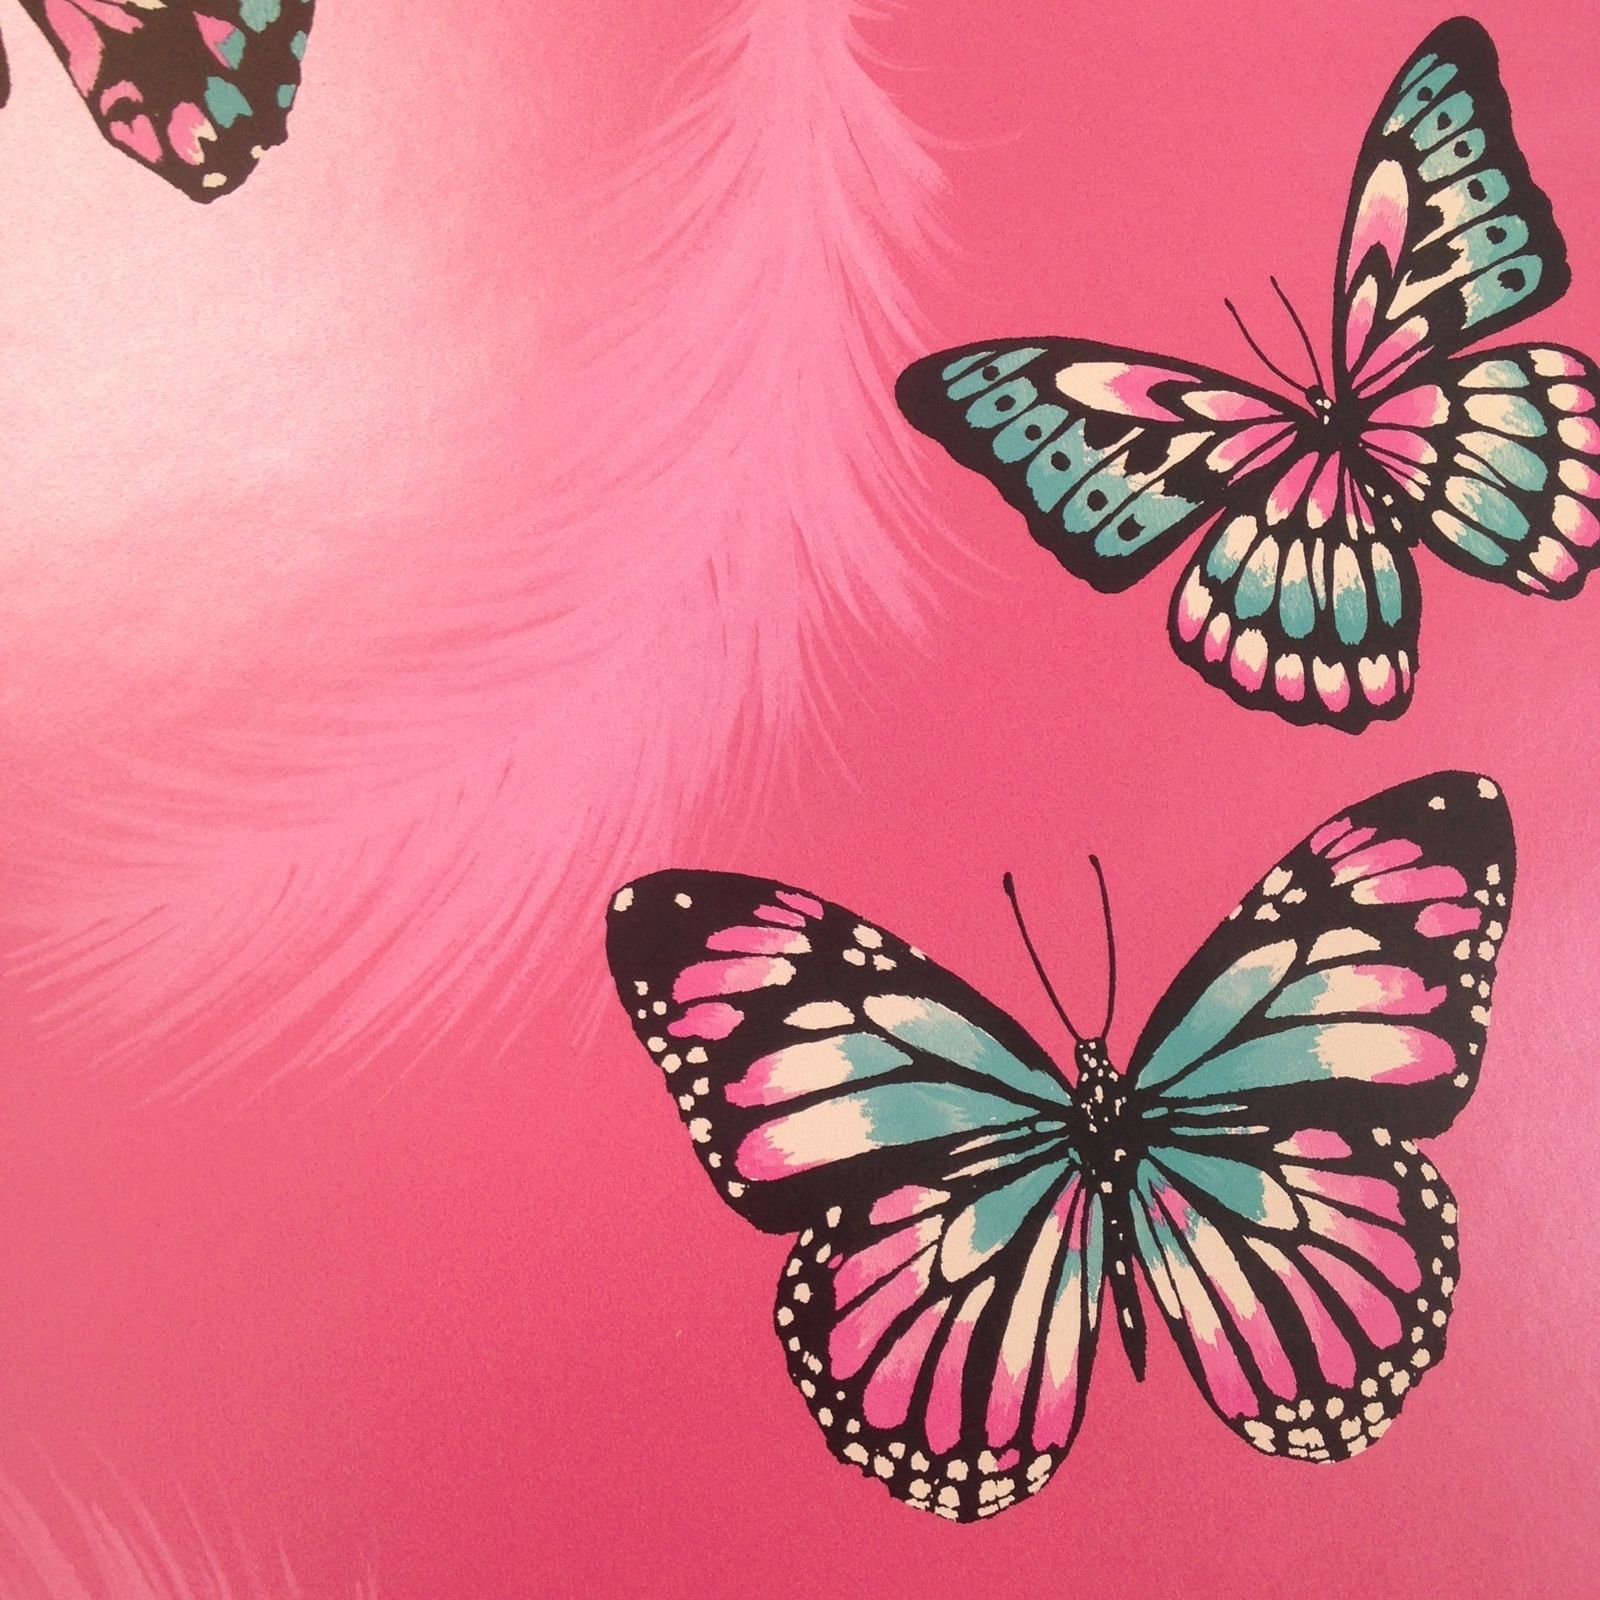 farfalla wallpaper uk,la farfalla,cynthia subgenus,insetto,falene e farfalle,rosa